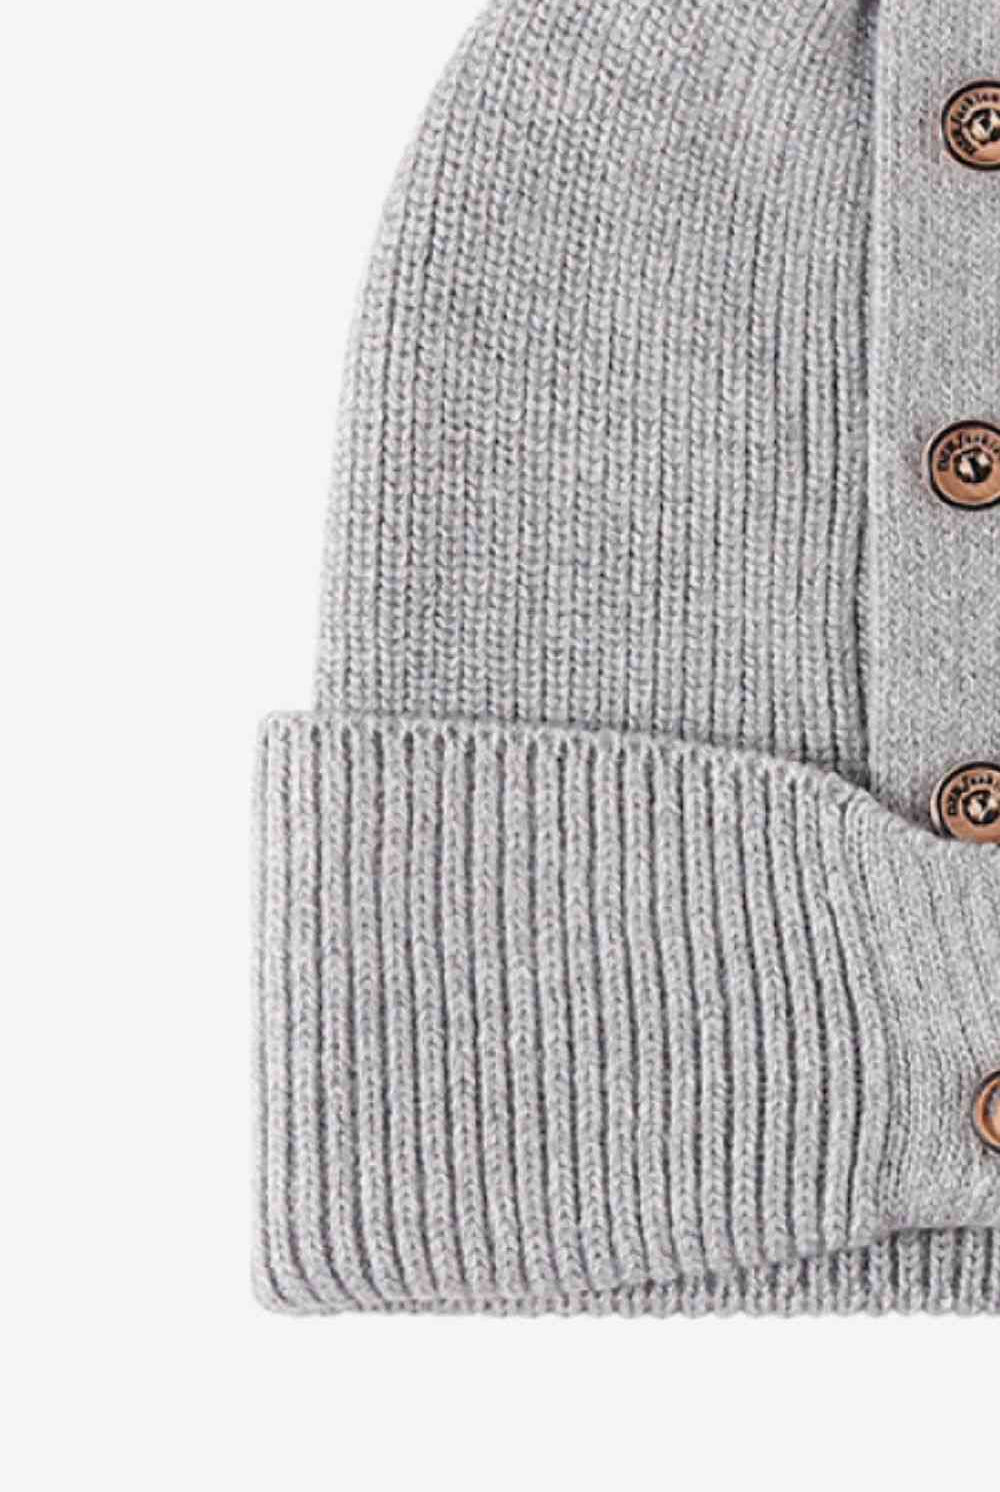 Light Gray Button Detail Rib-Knit Cuff Beanie Winter Accessories